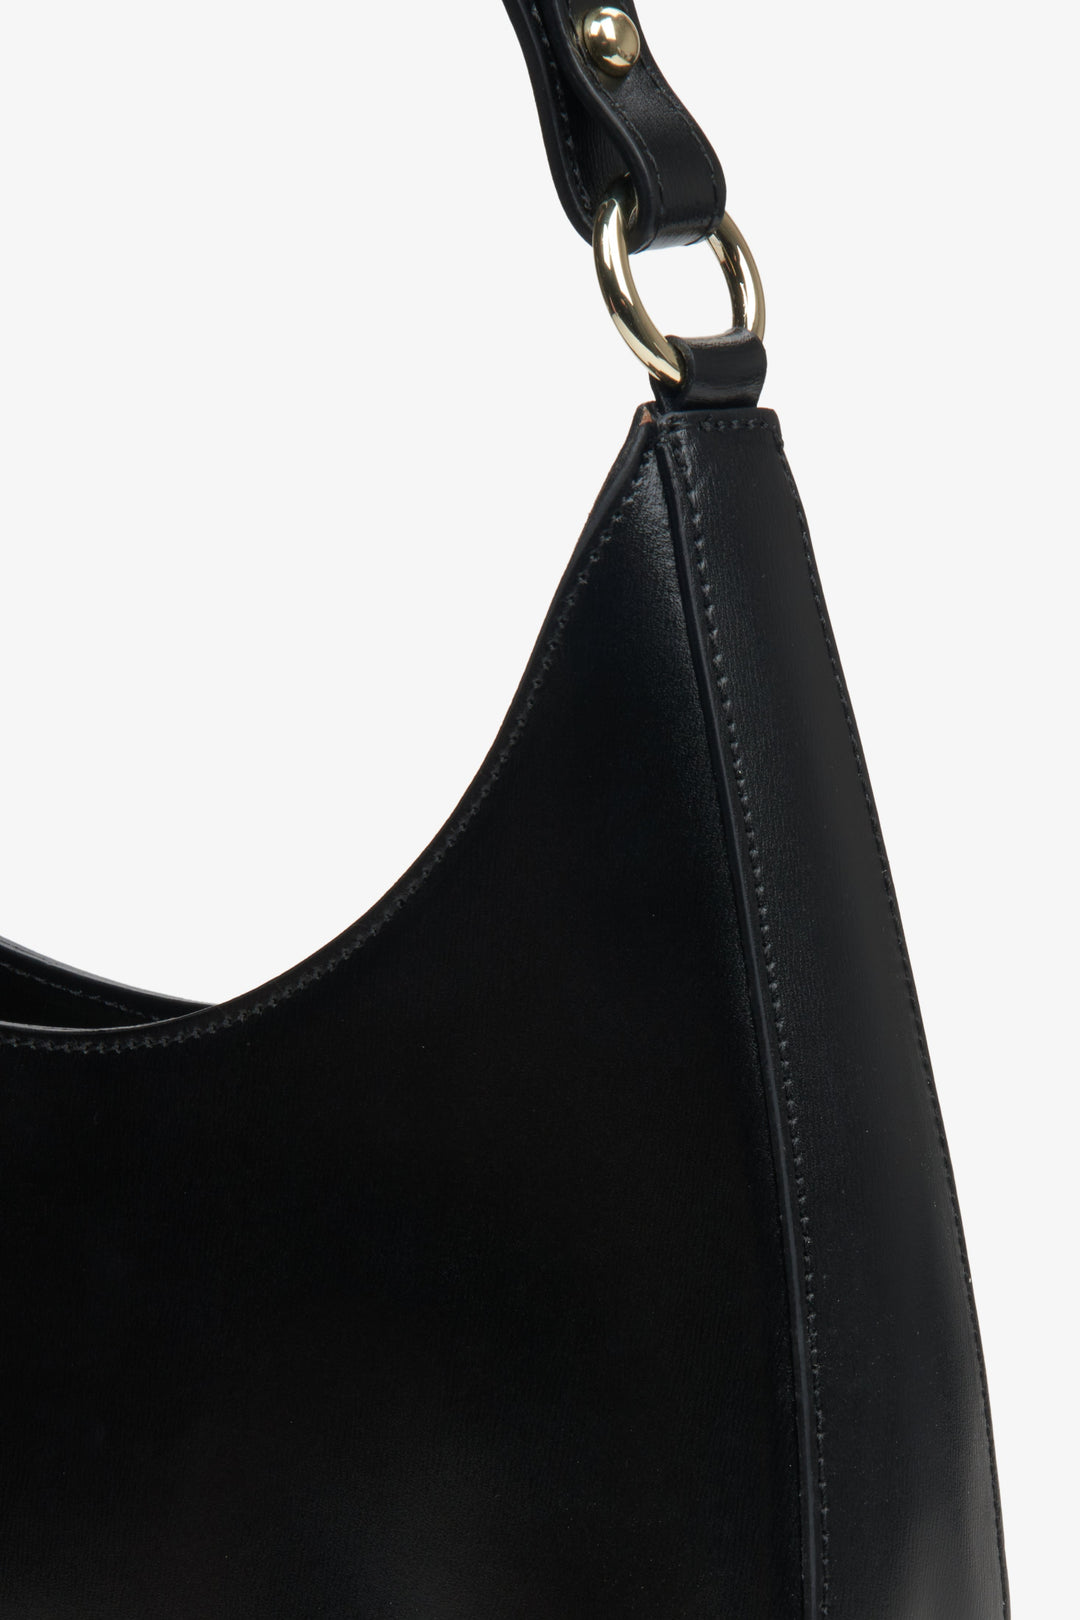 Women's Italian natural leather shoulder bag in black.